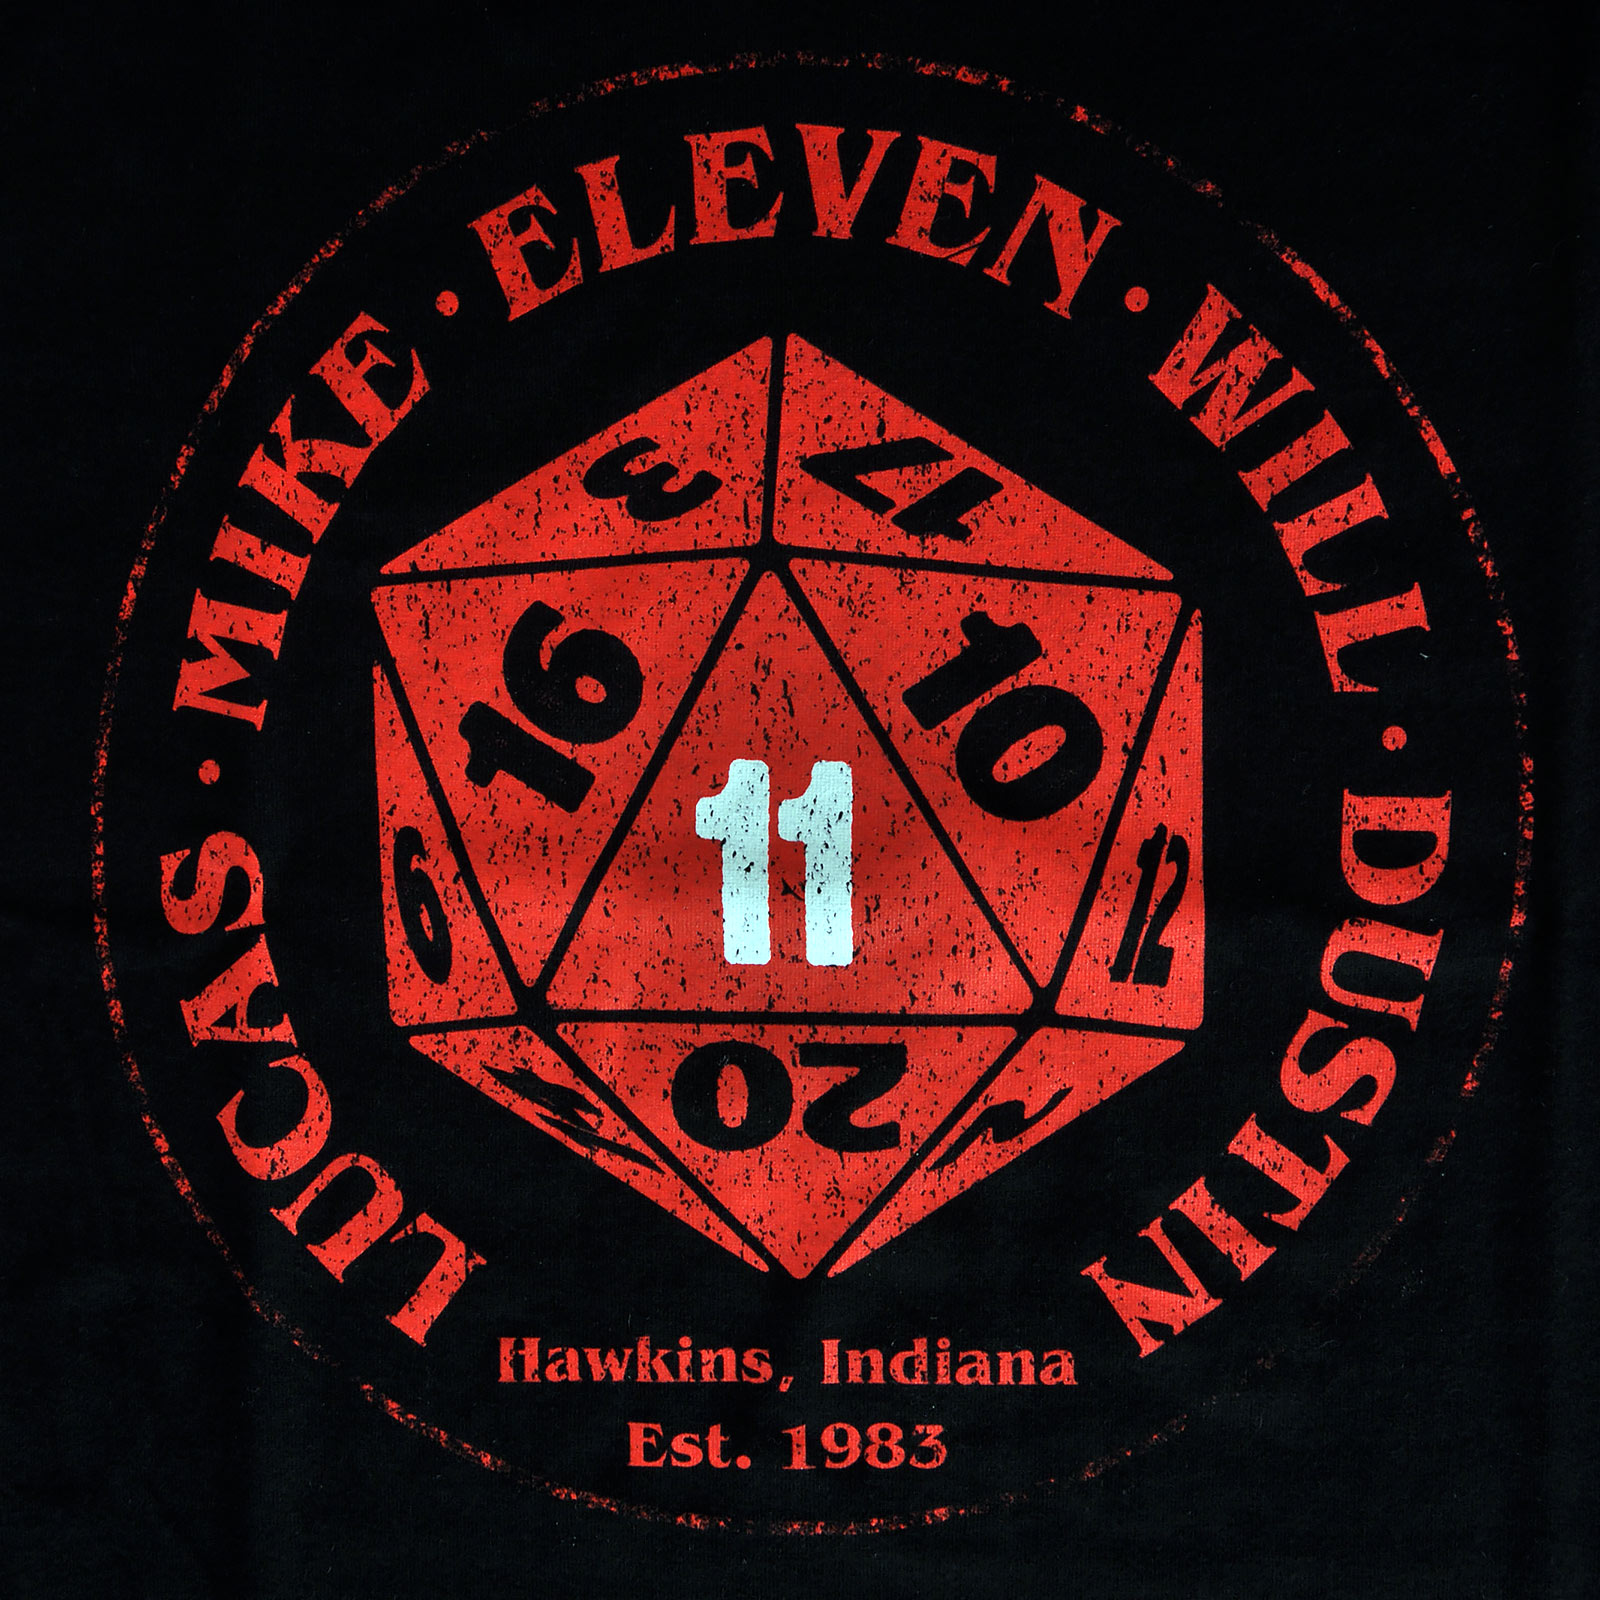 Eleven Dice T-Shirt für Stranger Things Fans